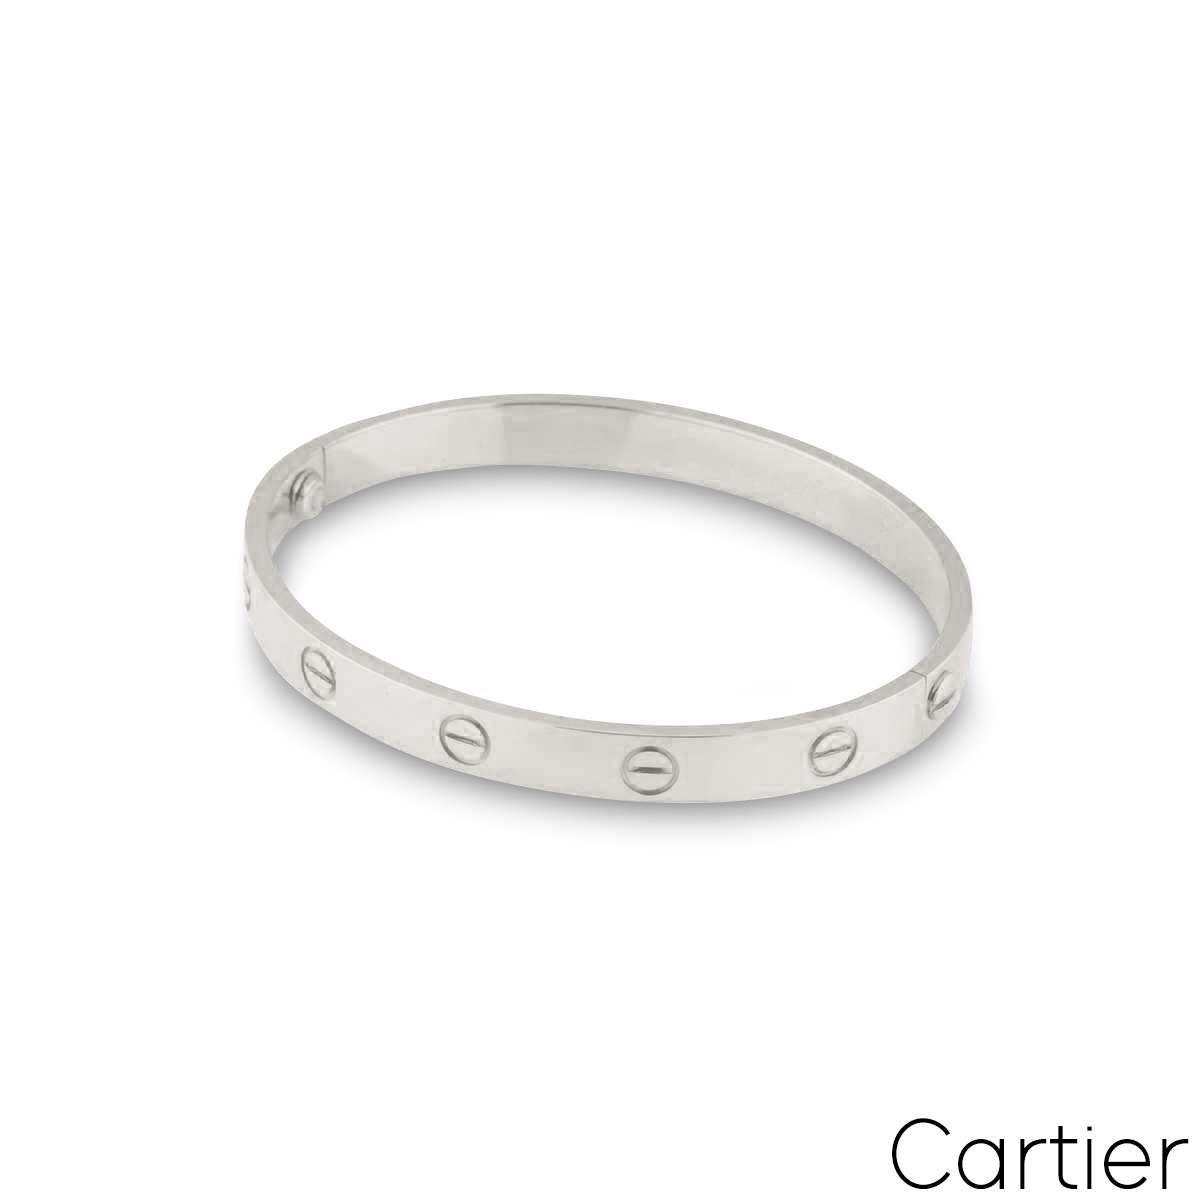 Cartier White Gold Plain Love Bracelet Size 18 B6035418